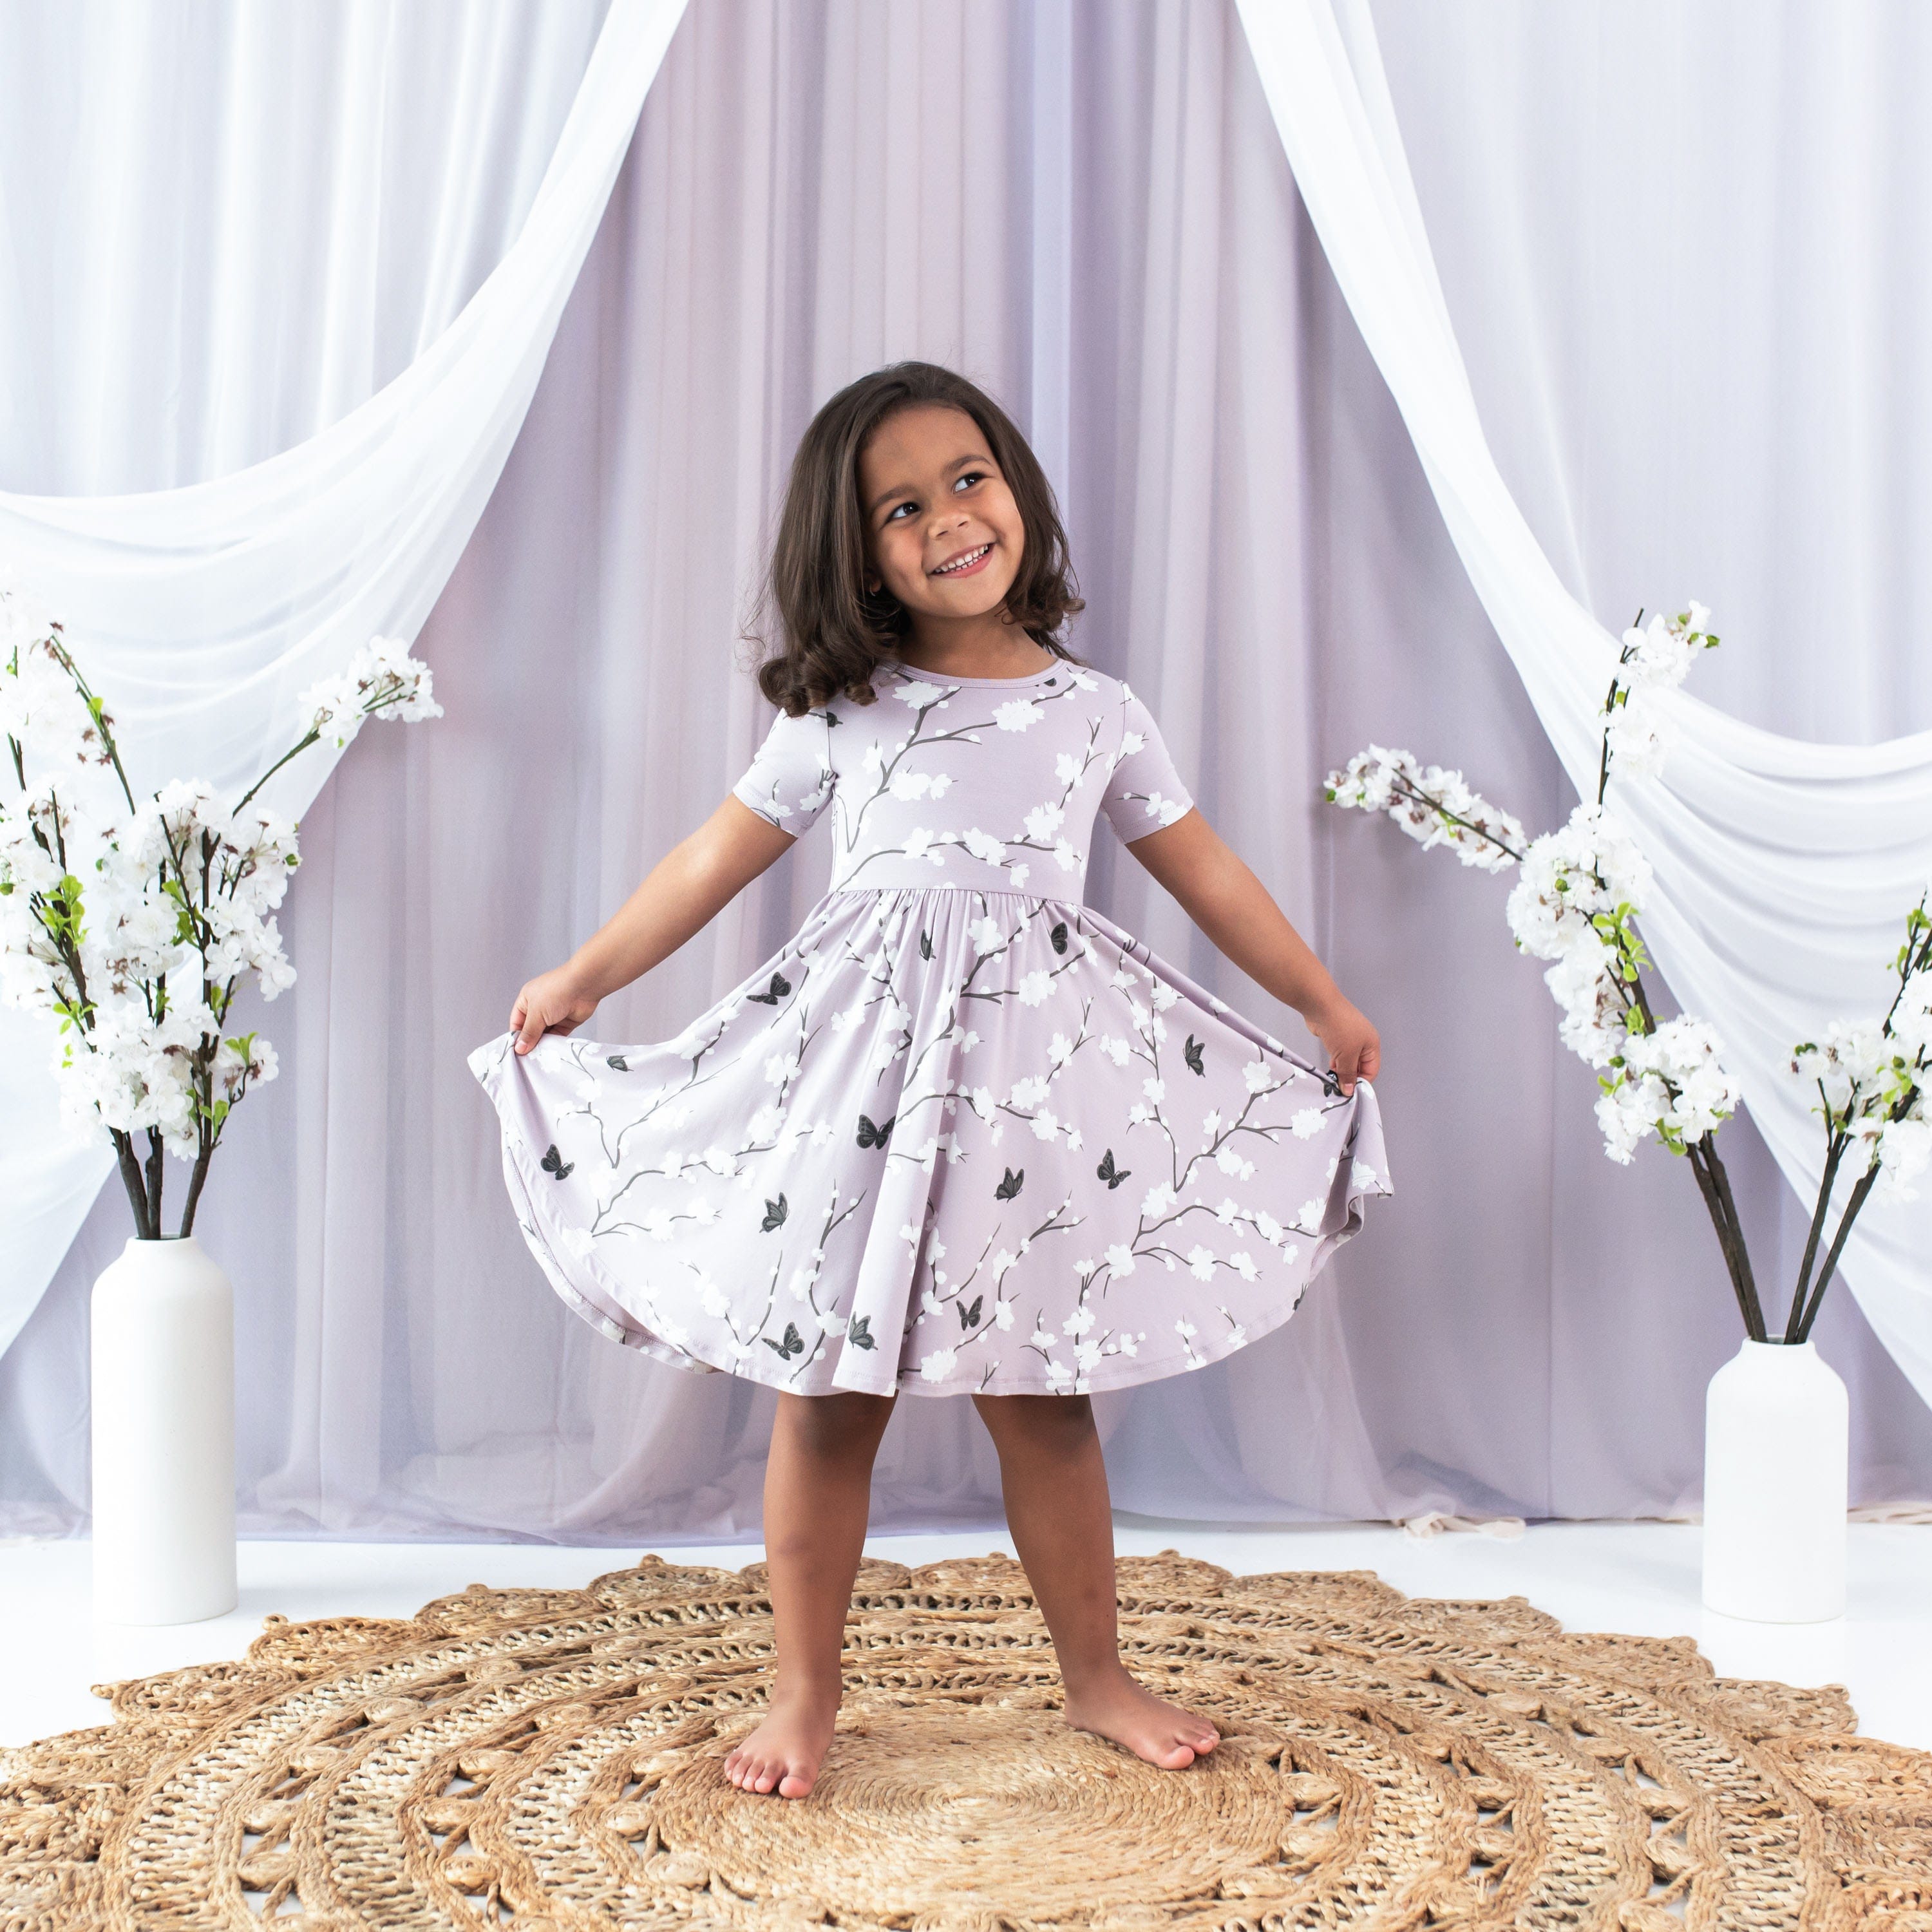 Kyte Baby Toddler Short Sleeve Twirl Dress Twirl Dress in Cherry Blossom